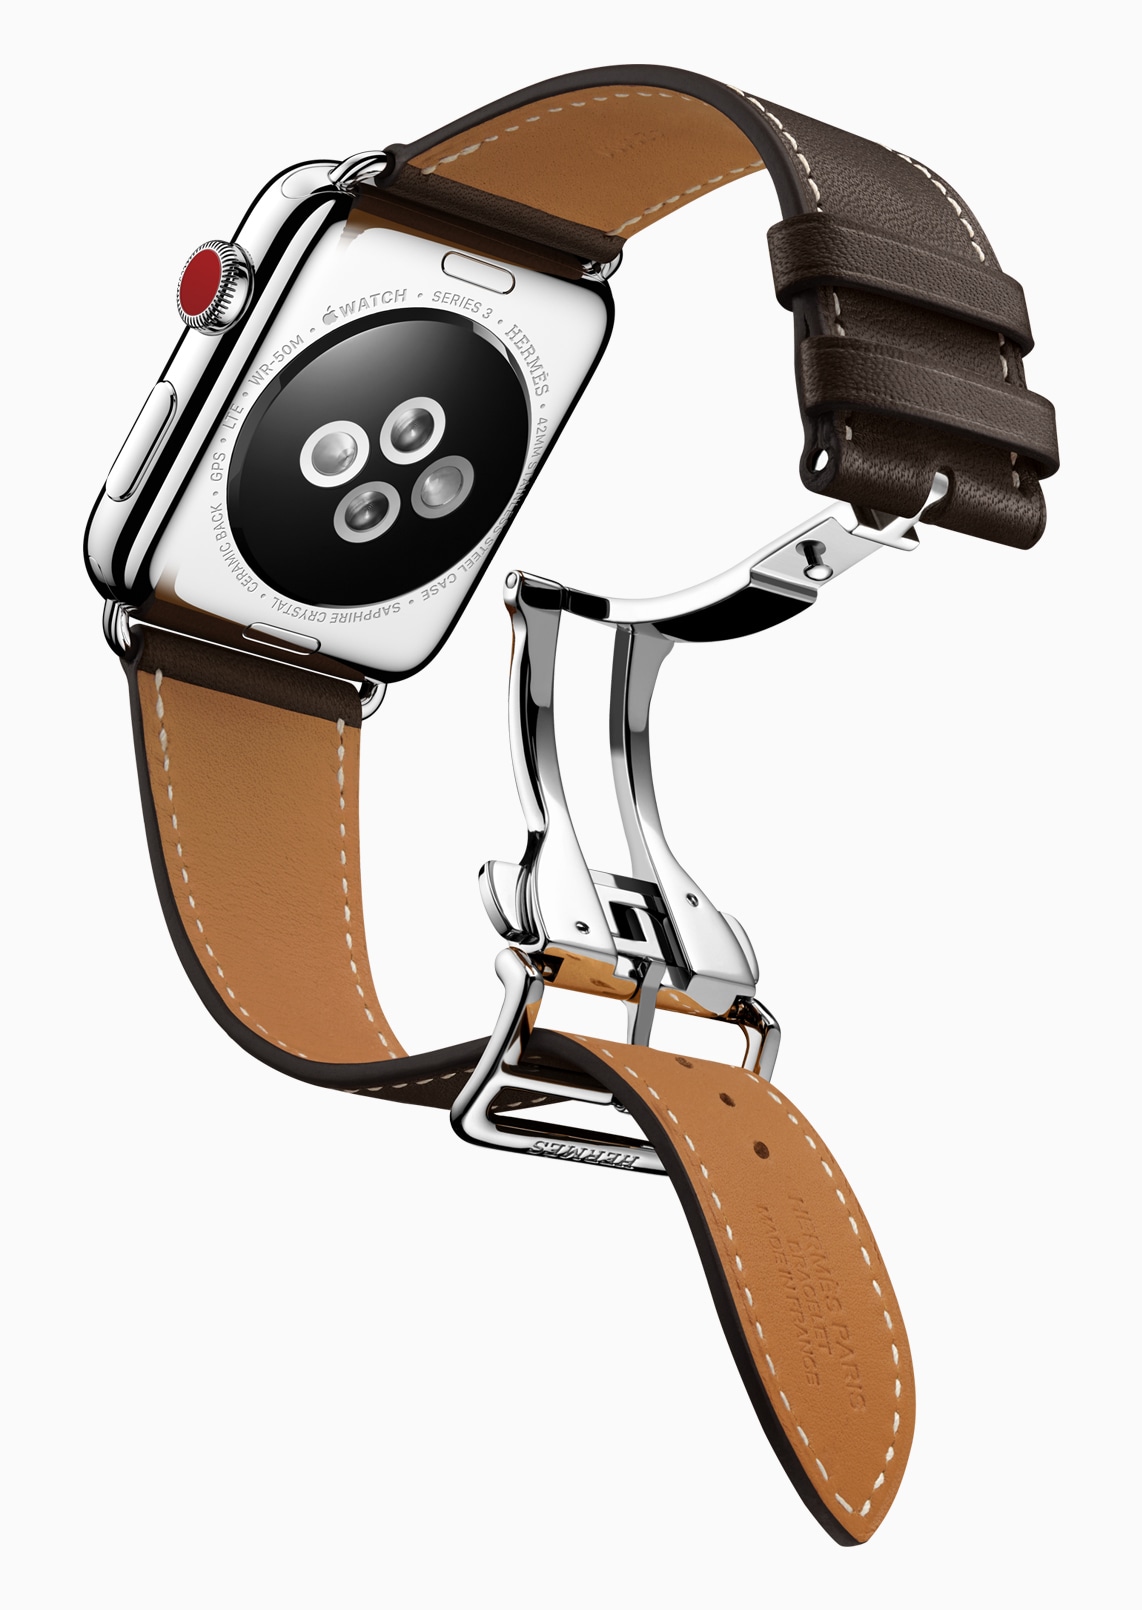 Hermès version of the Apple Watch Series 3